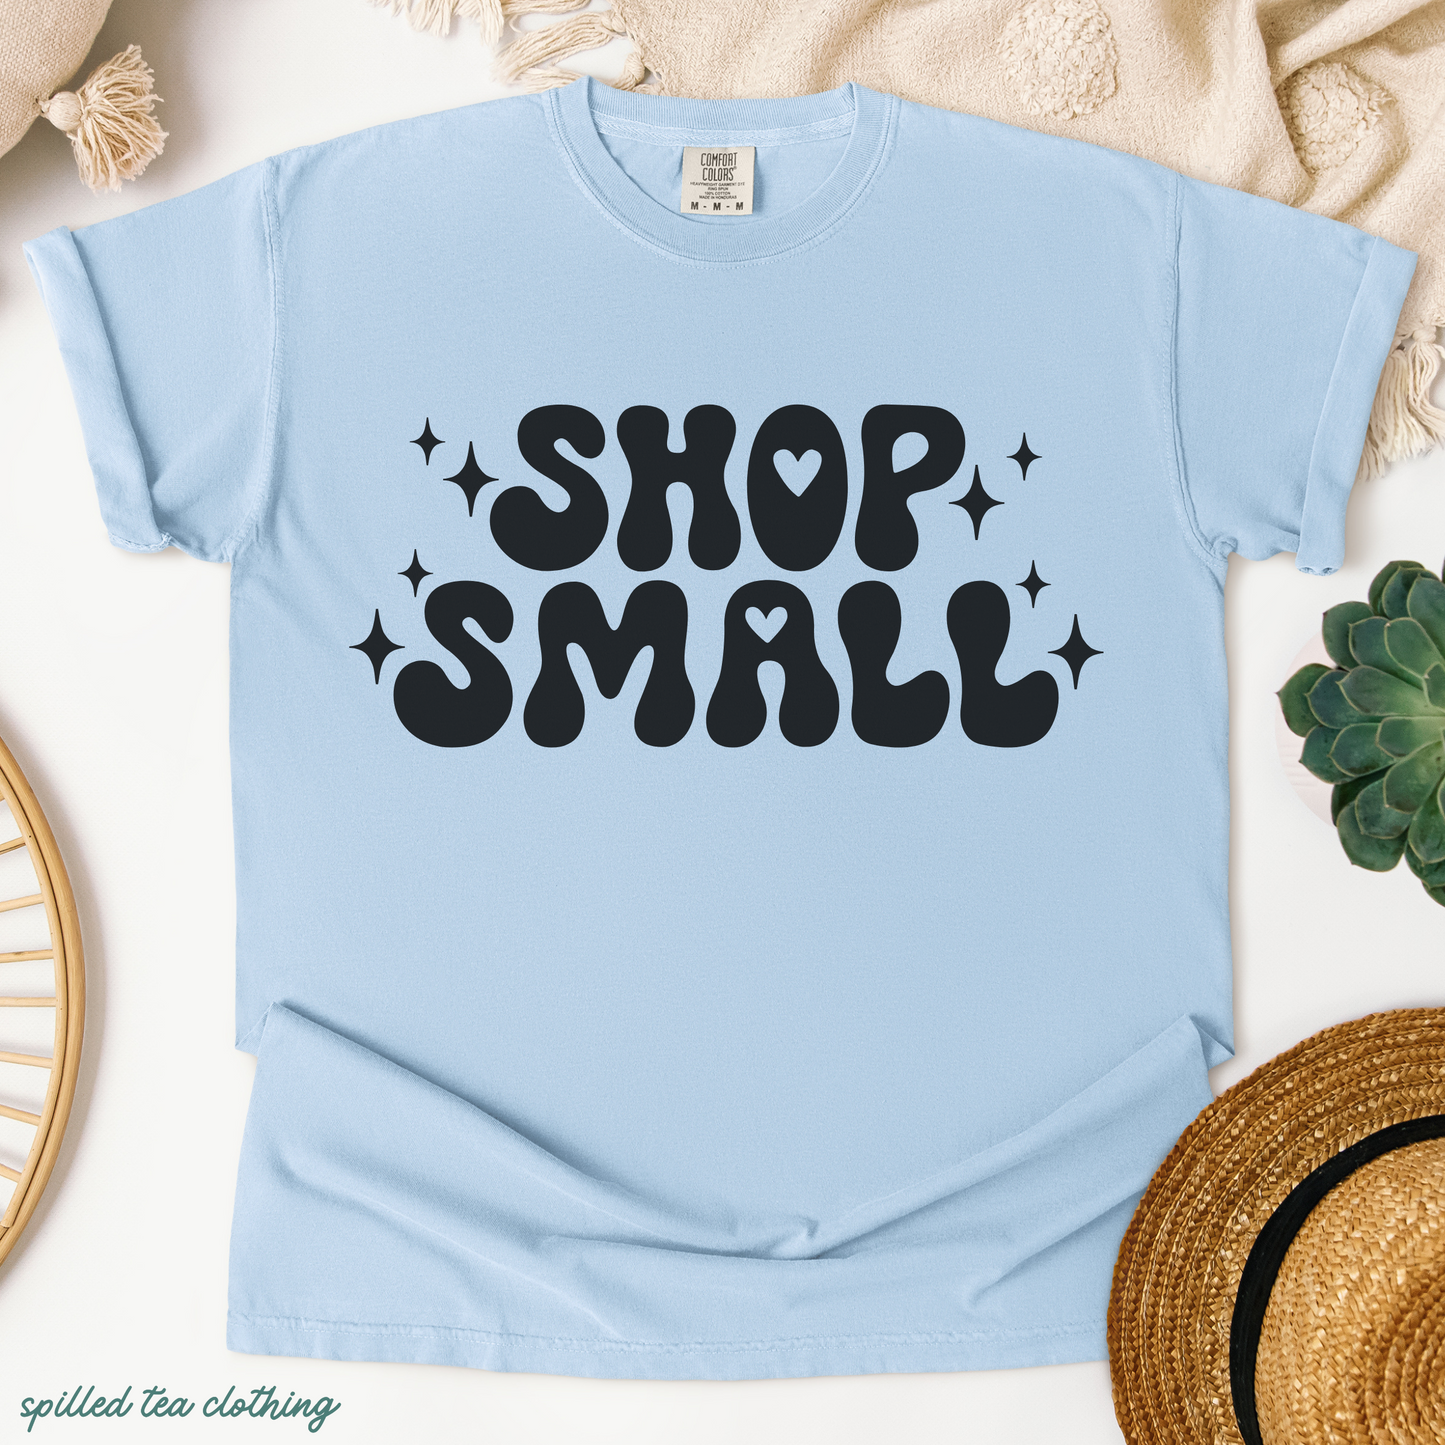 Shop Small T-shirt